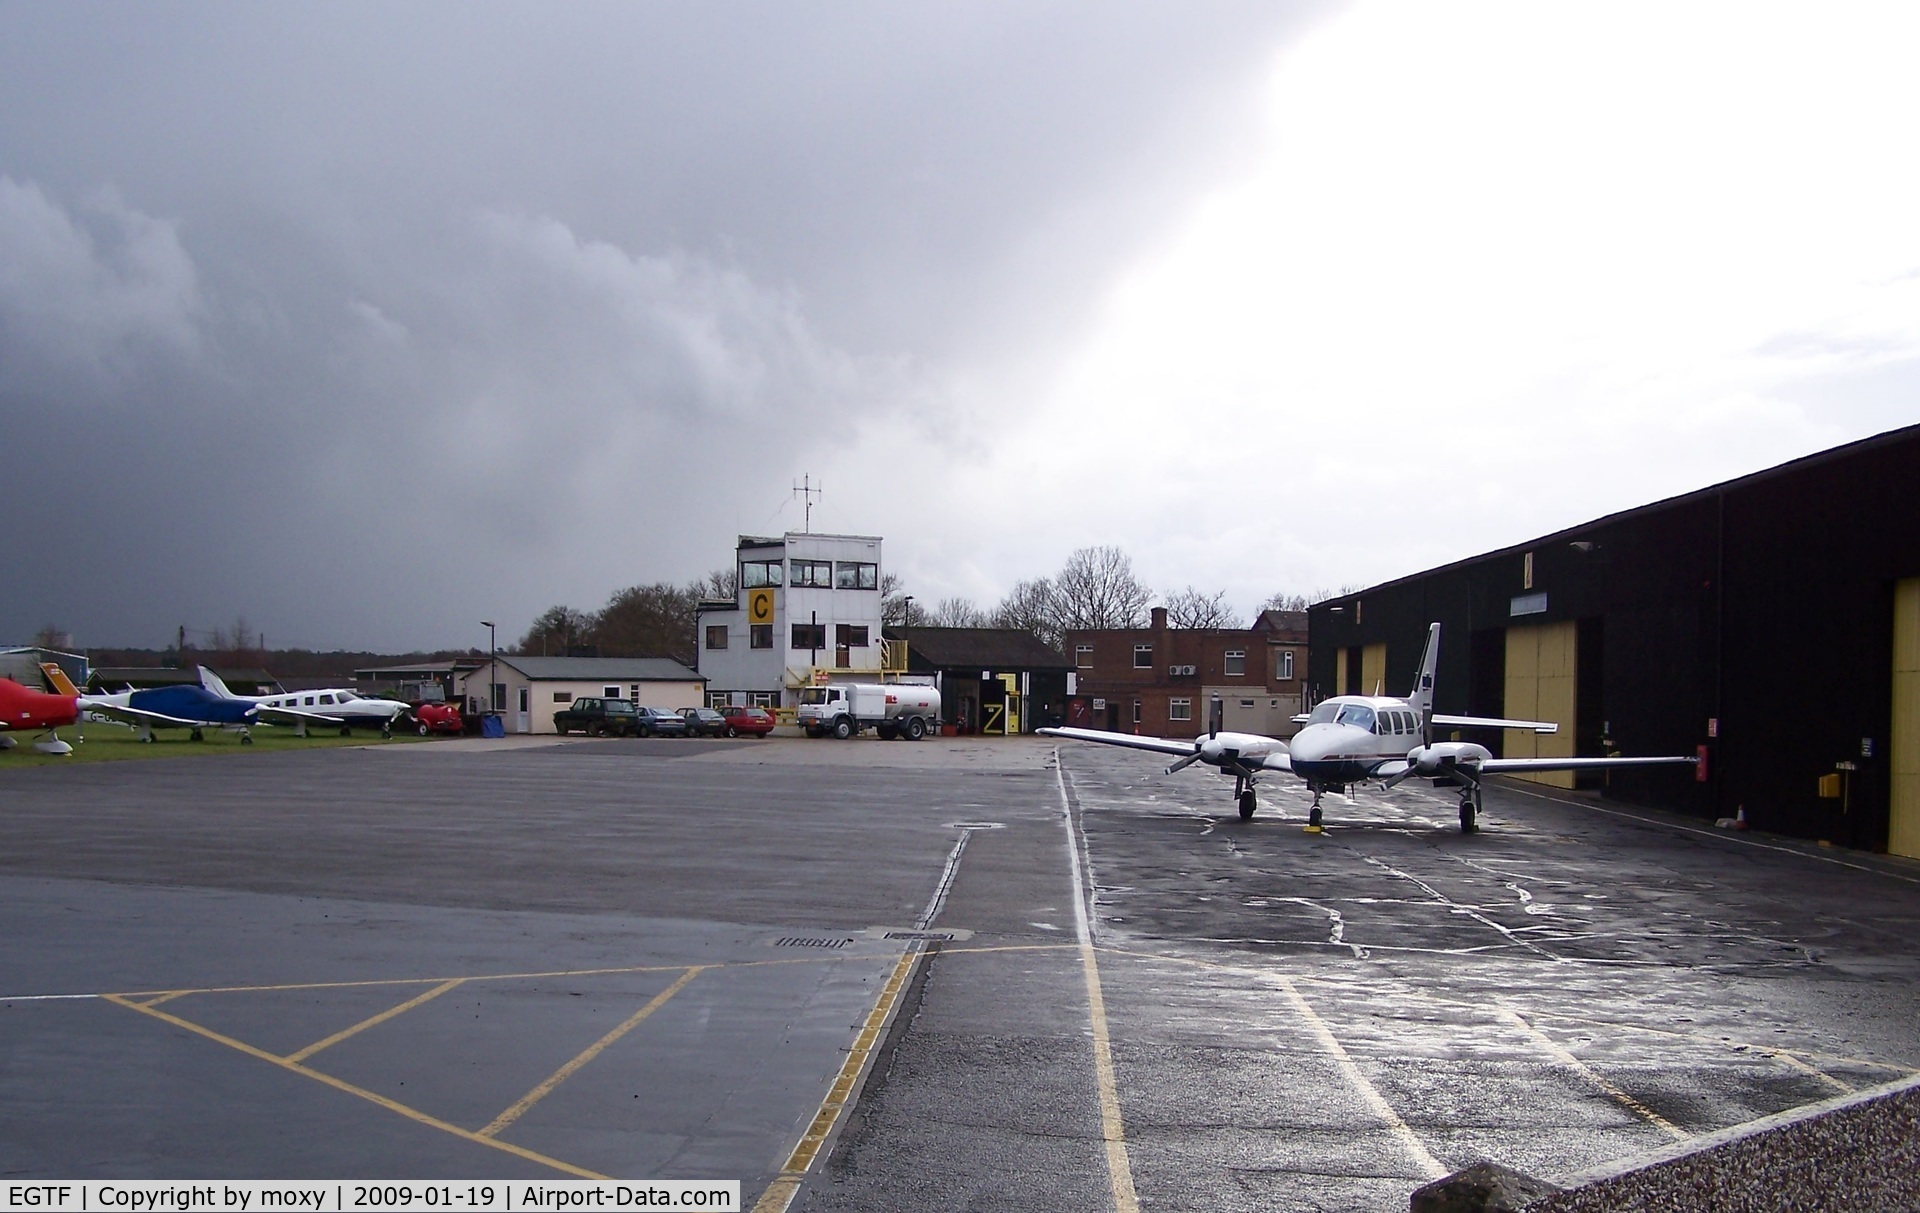 Fairoaks Airport, Chobham, England United Kingdom (EGTF) - A stormy afternoon at Fairoaks